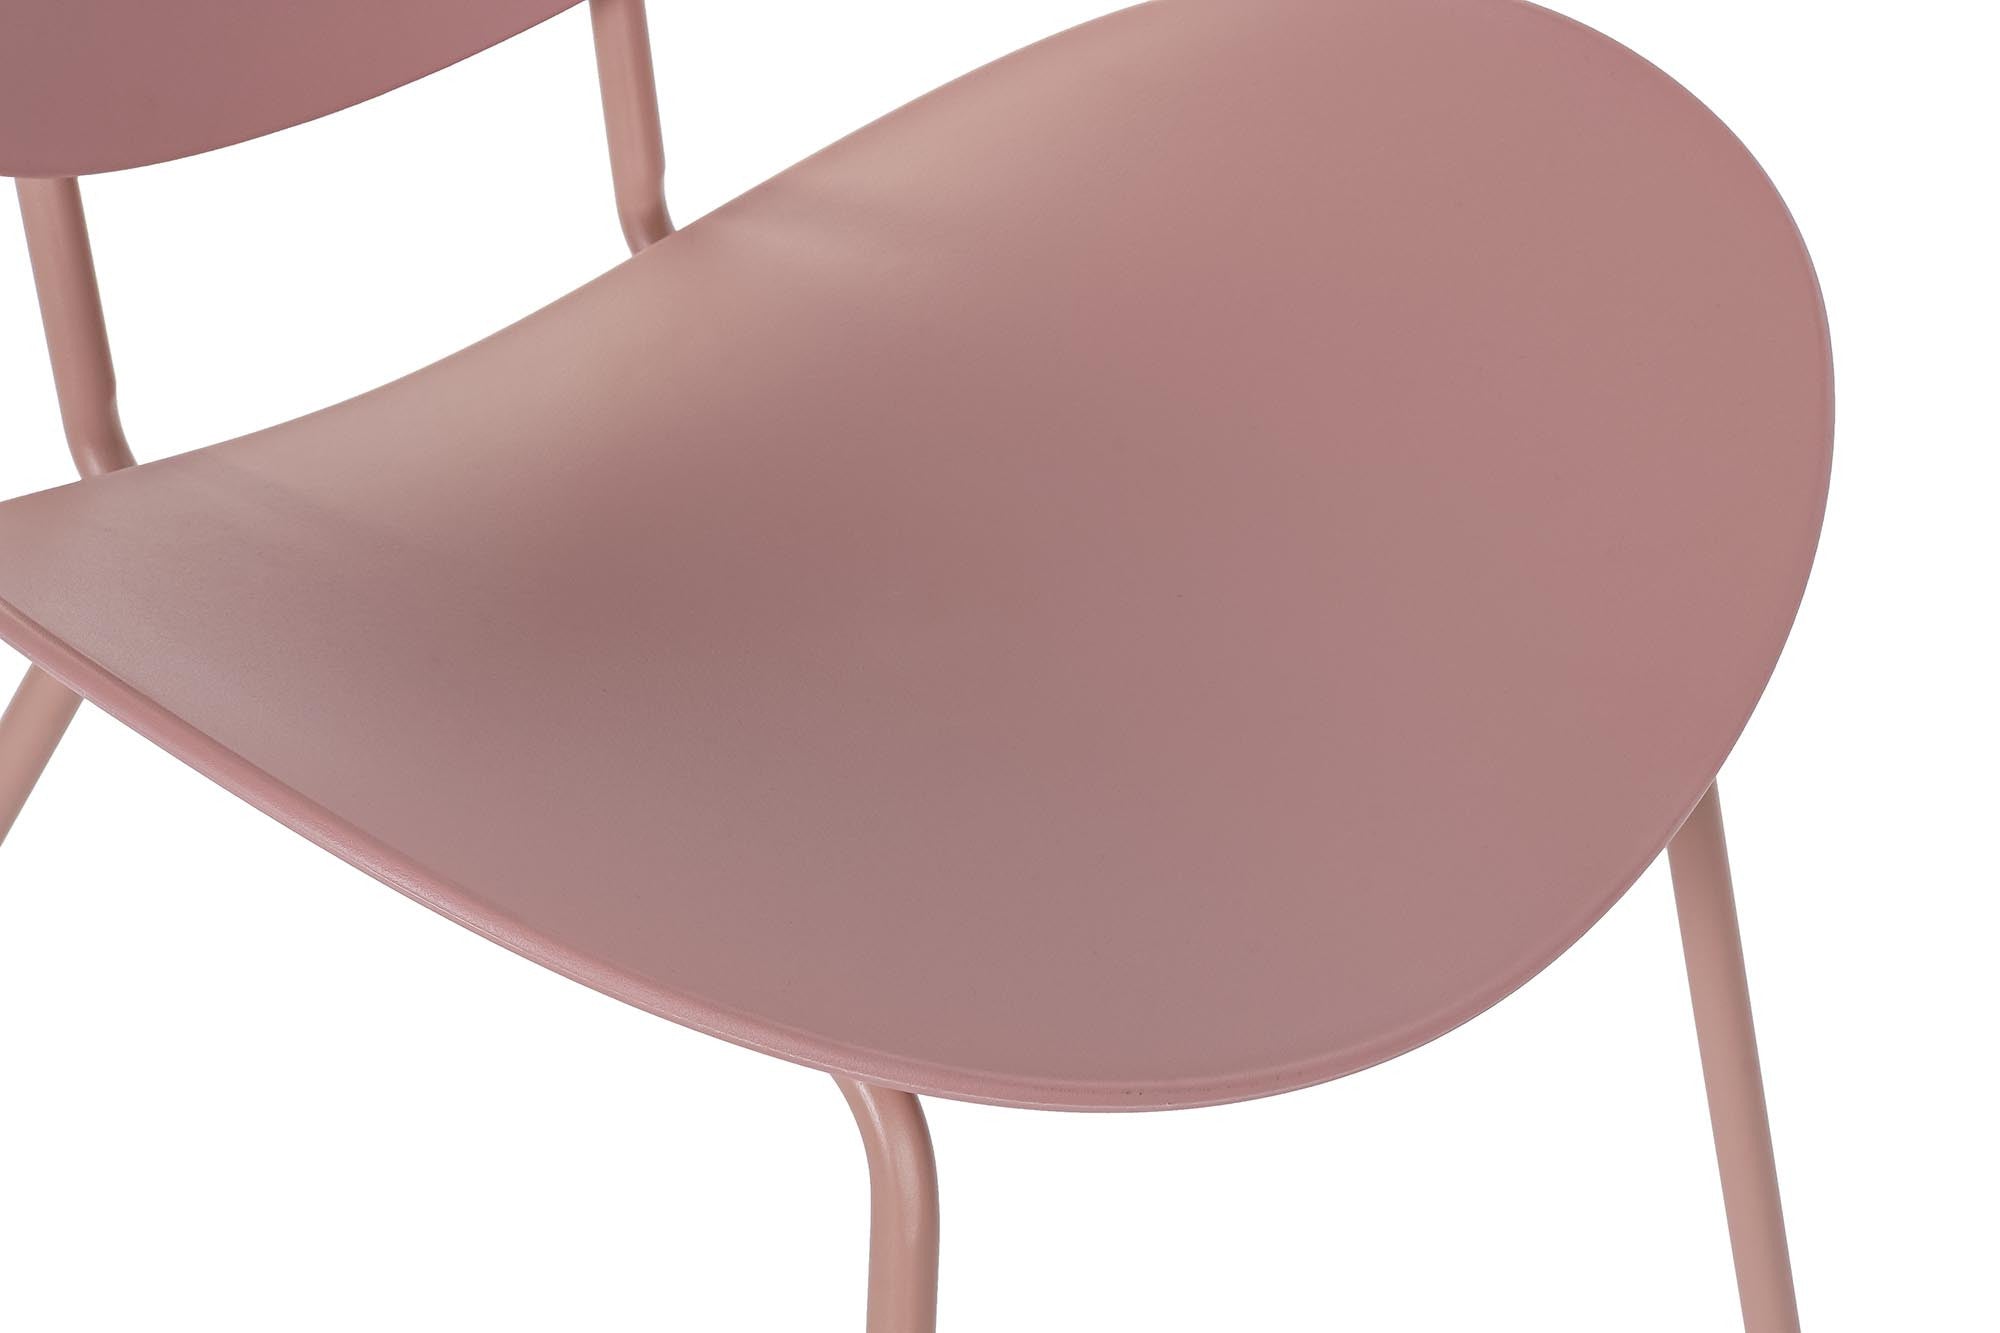 Chaise Design Moderne Rose Mat Home Decor Métal et Polypropylène (PP) (50 x 55 x 79.5 cm)